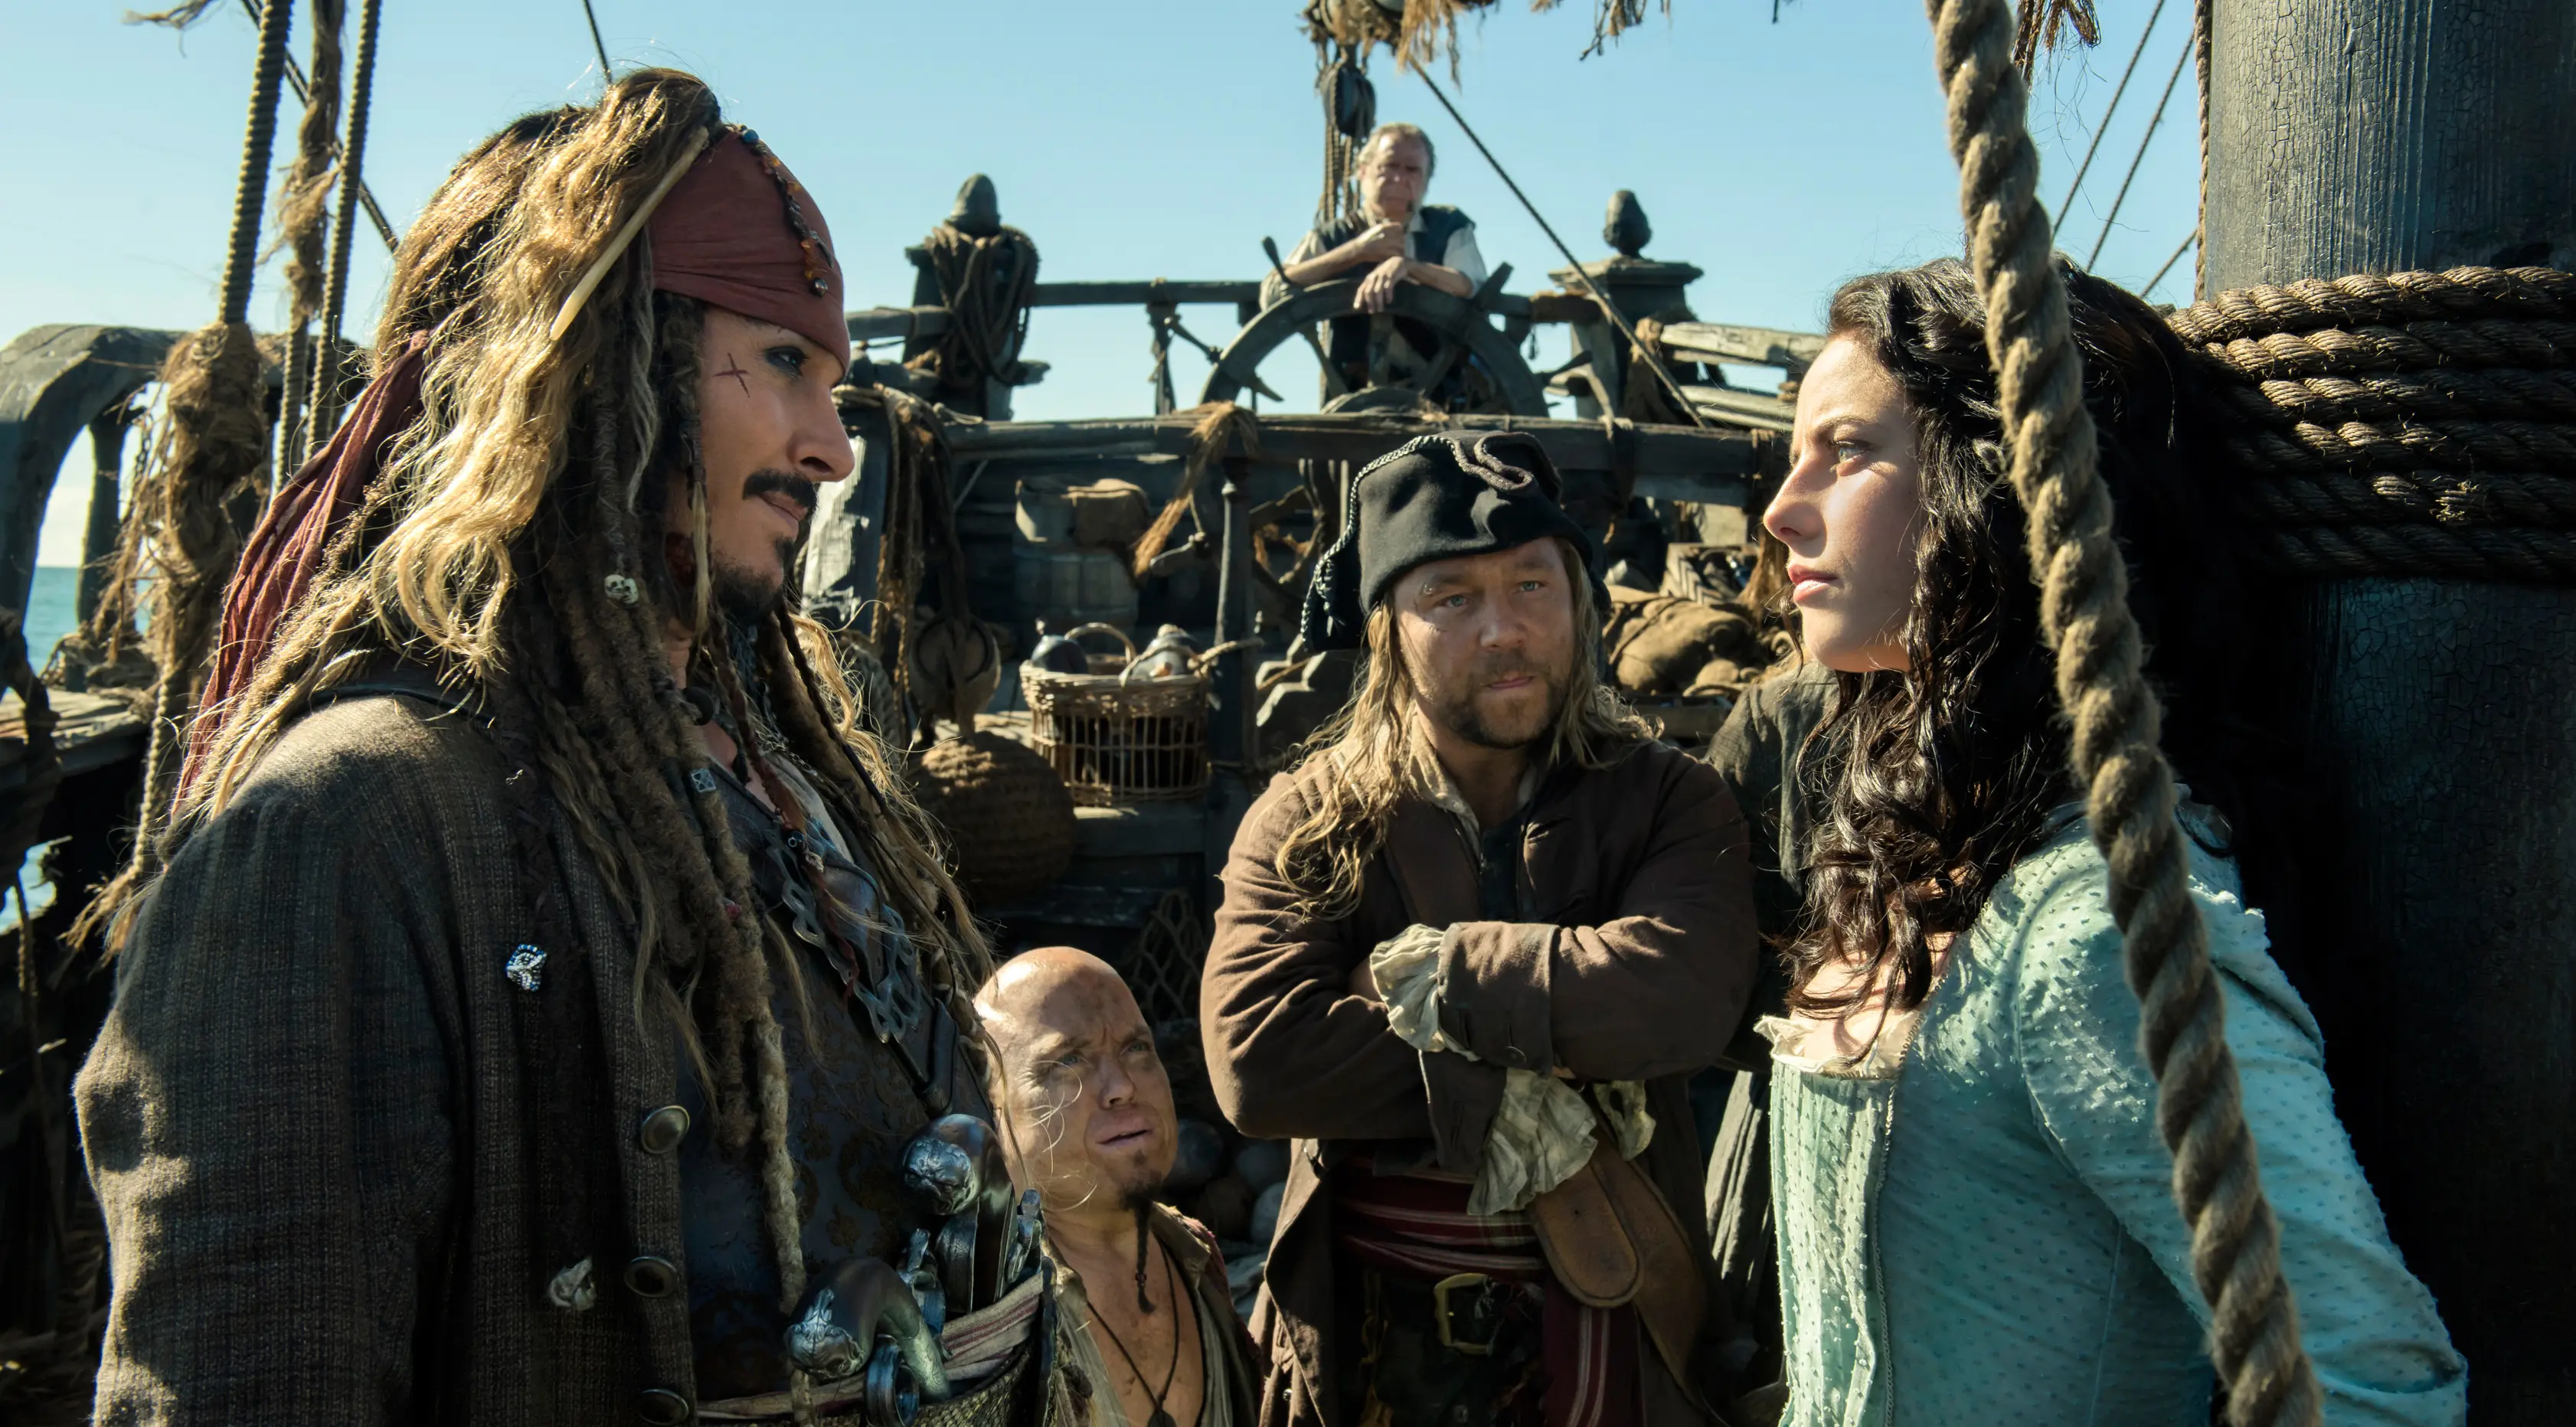 Gambar yang dirilis oleh Disney, Jack Sparrow yang diperankan oleh Johnny Depp beradu akting dengan Carina Smyth yang diperankan Kaya Scodelario di Film "Pirates of the Caribbean: Dead Men Tell No Tales." (Peter Mountain / Disney via AP)